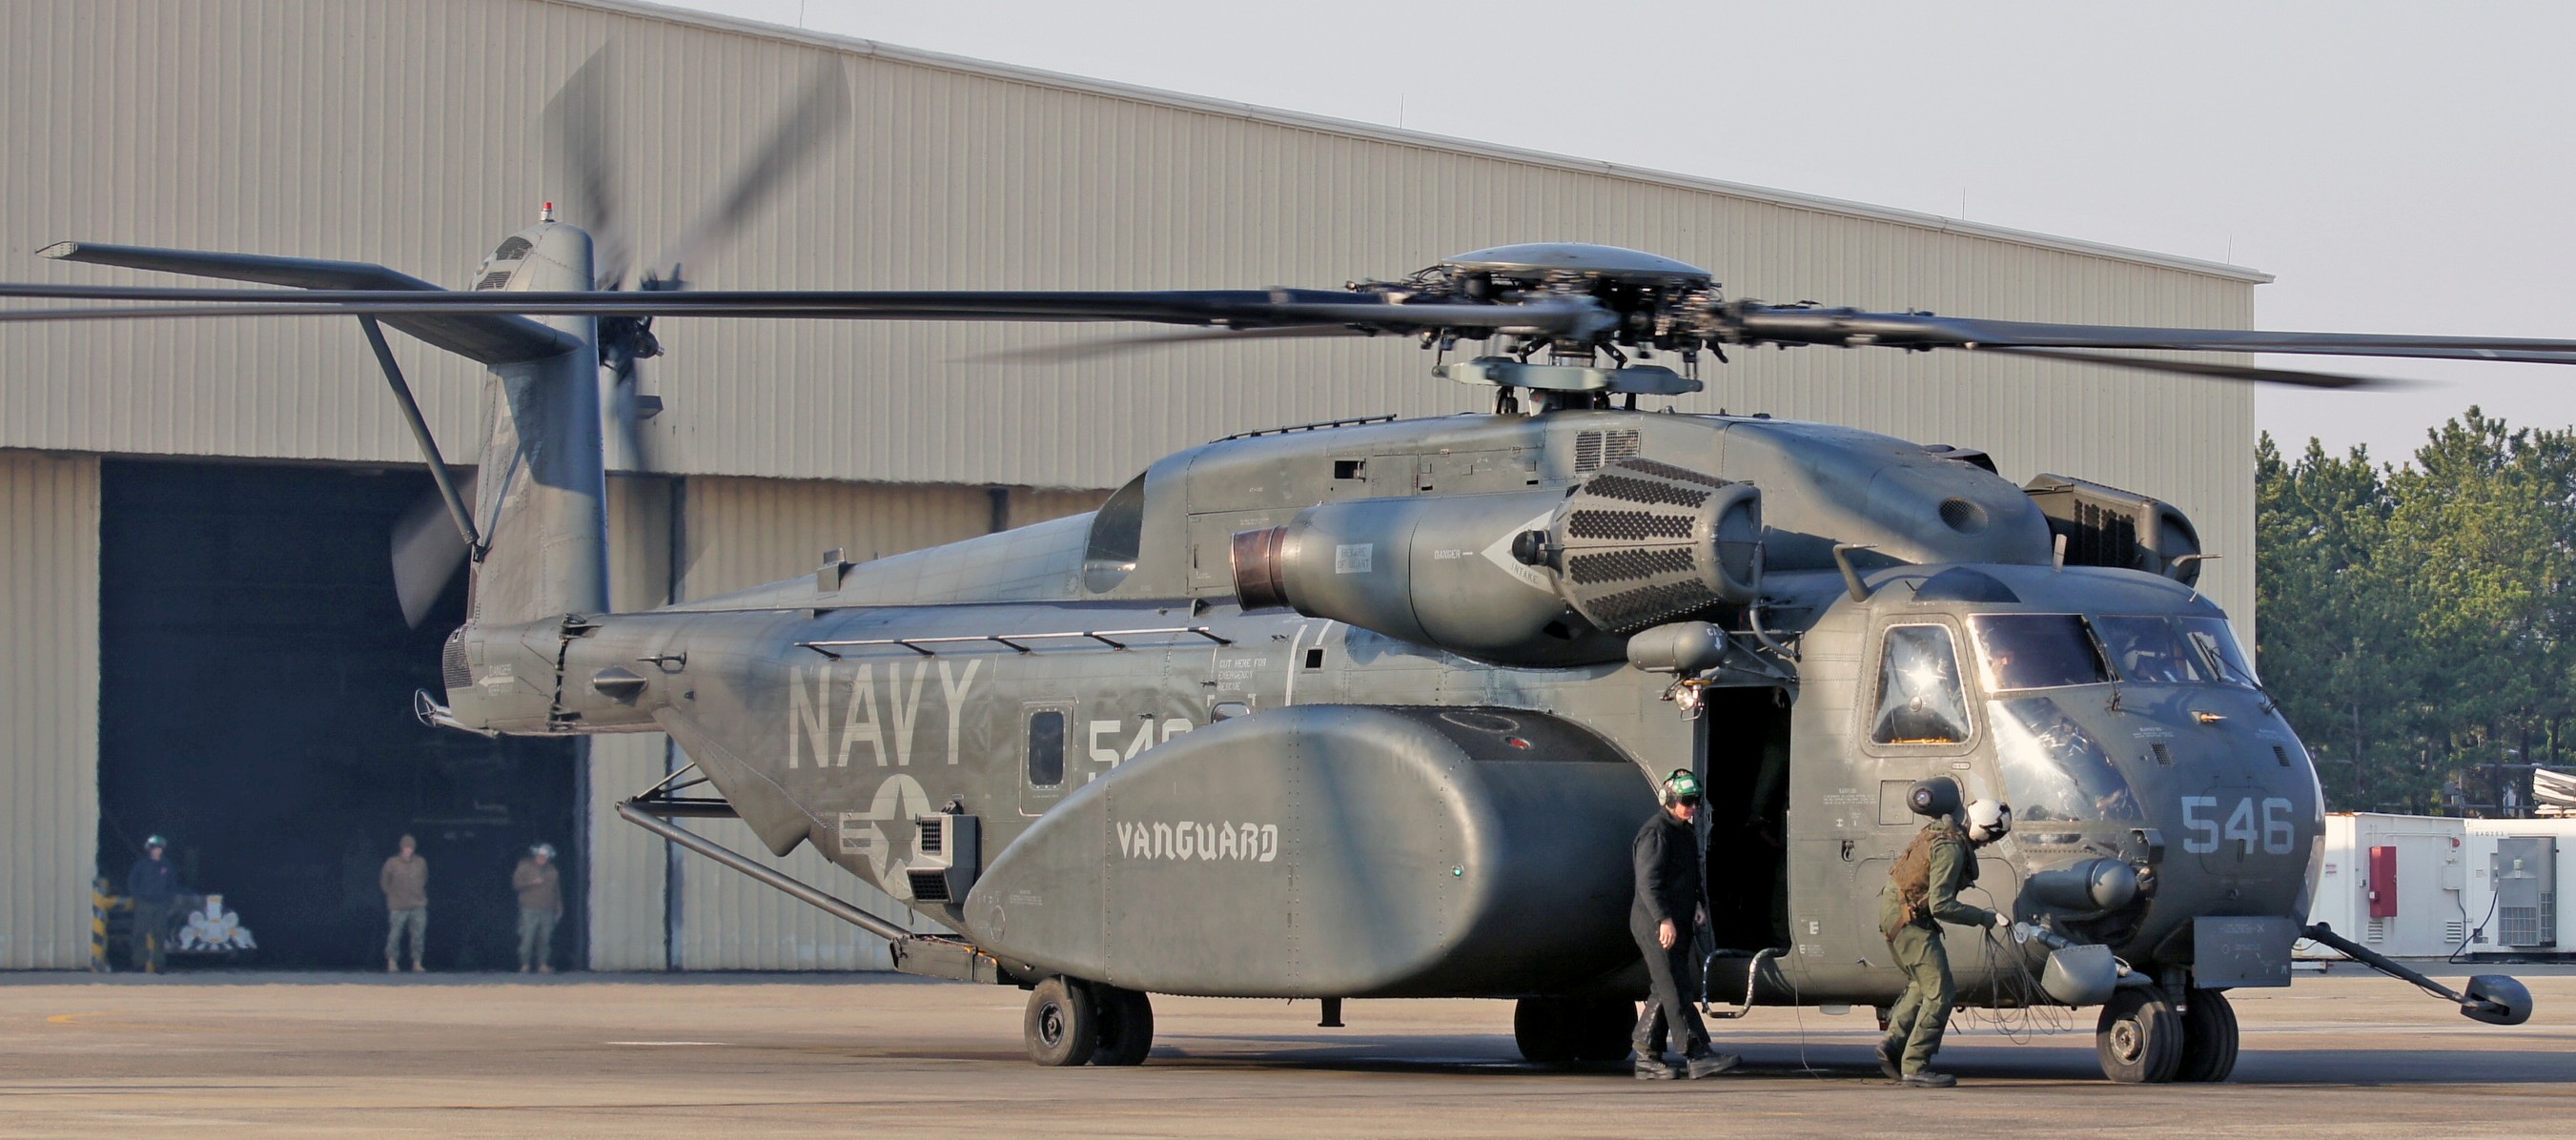 hm-14 vanguard helicopter mine countermeasures squadron navy mh-53e sea dragon 112